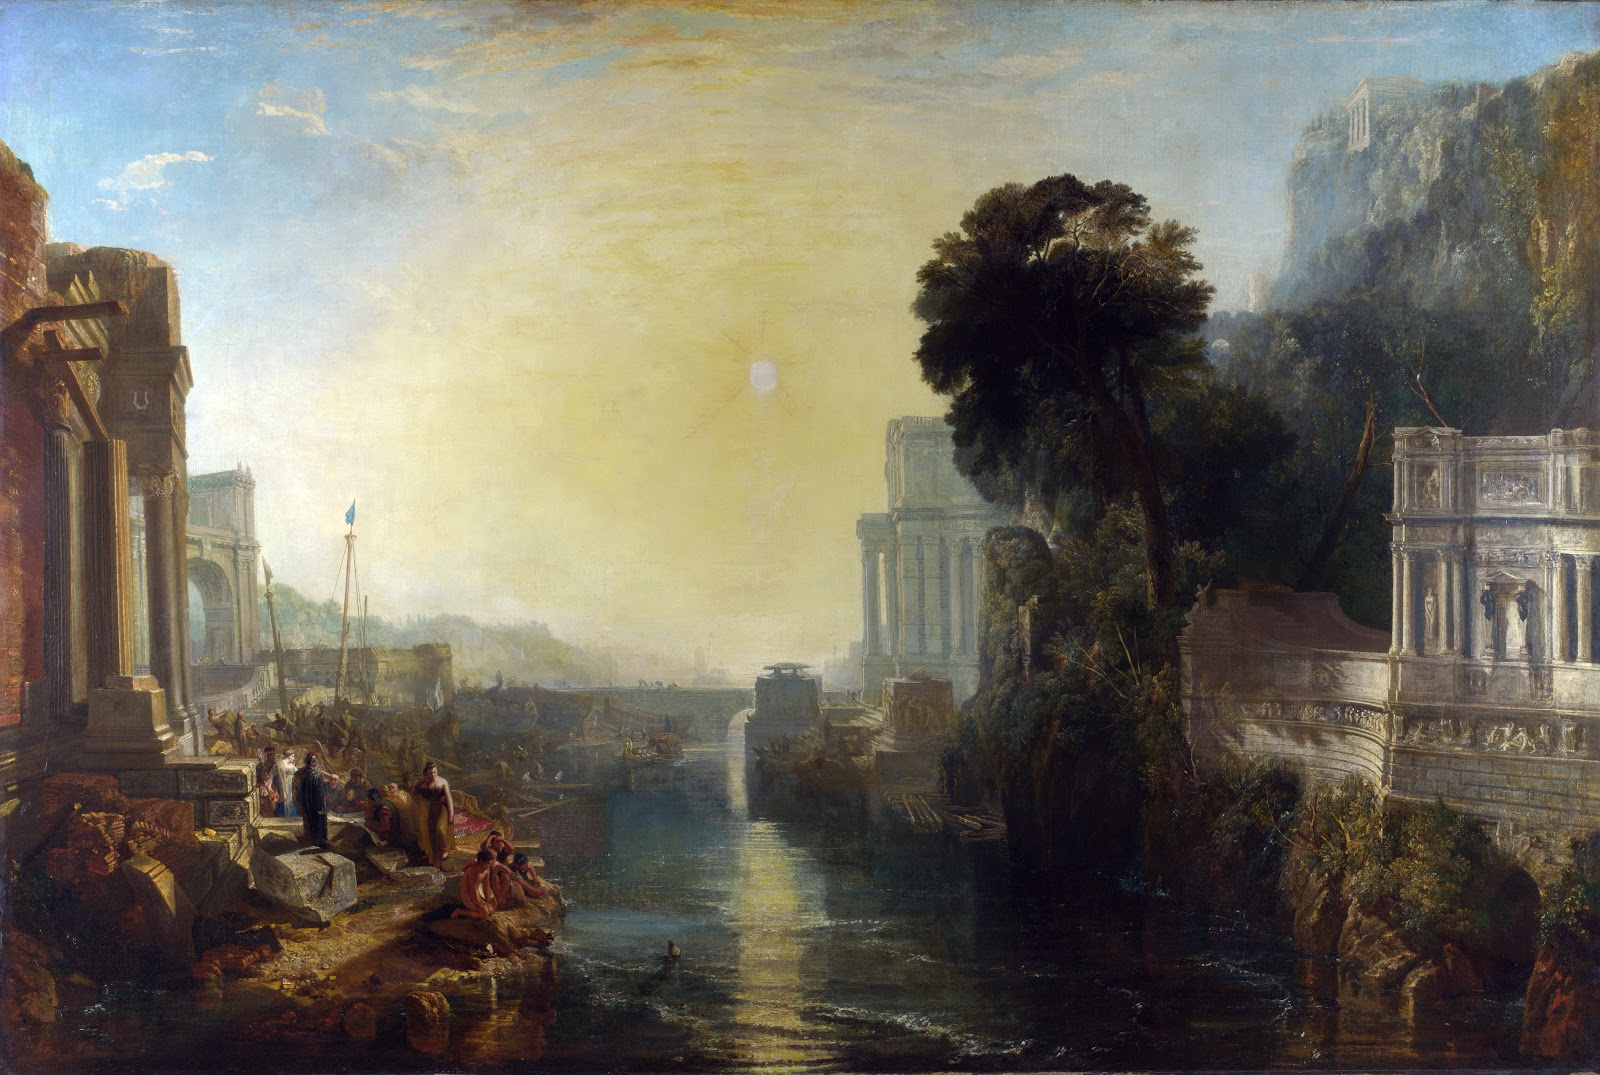 William+Turner-1775-1851 (10).jpg